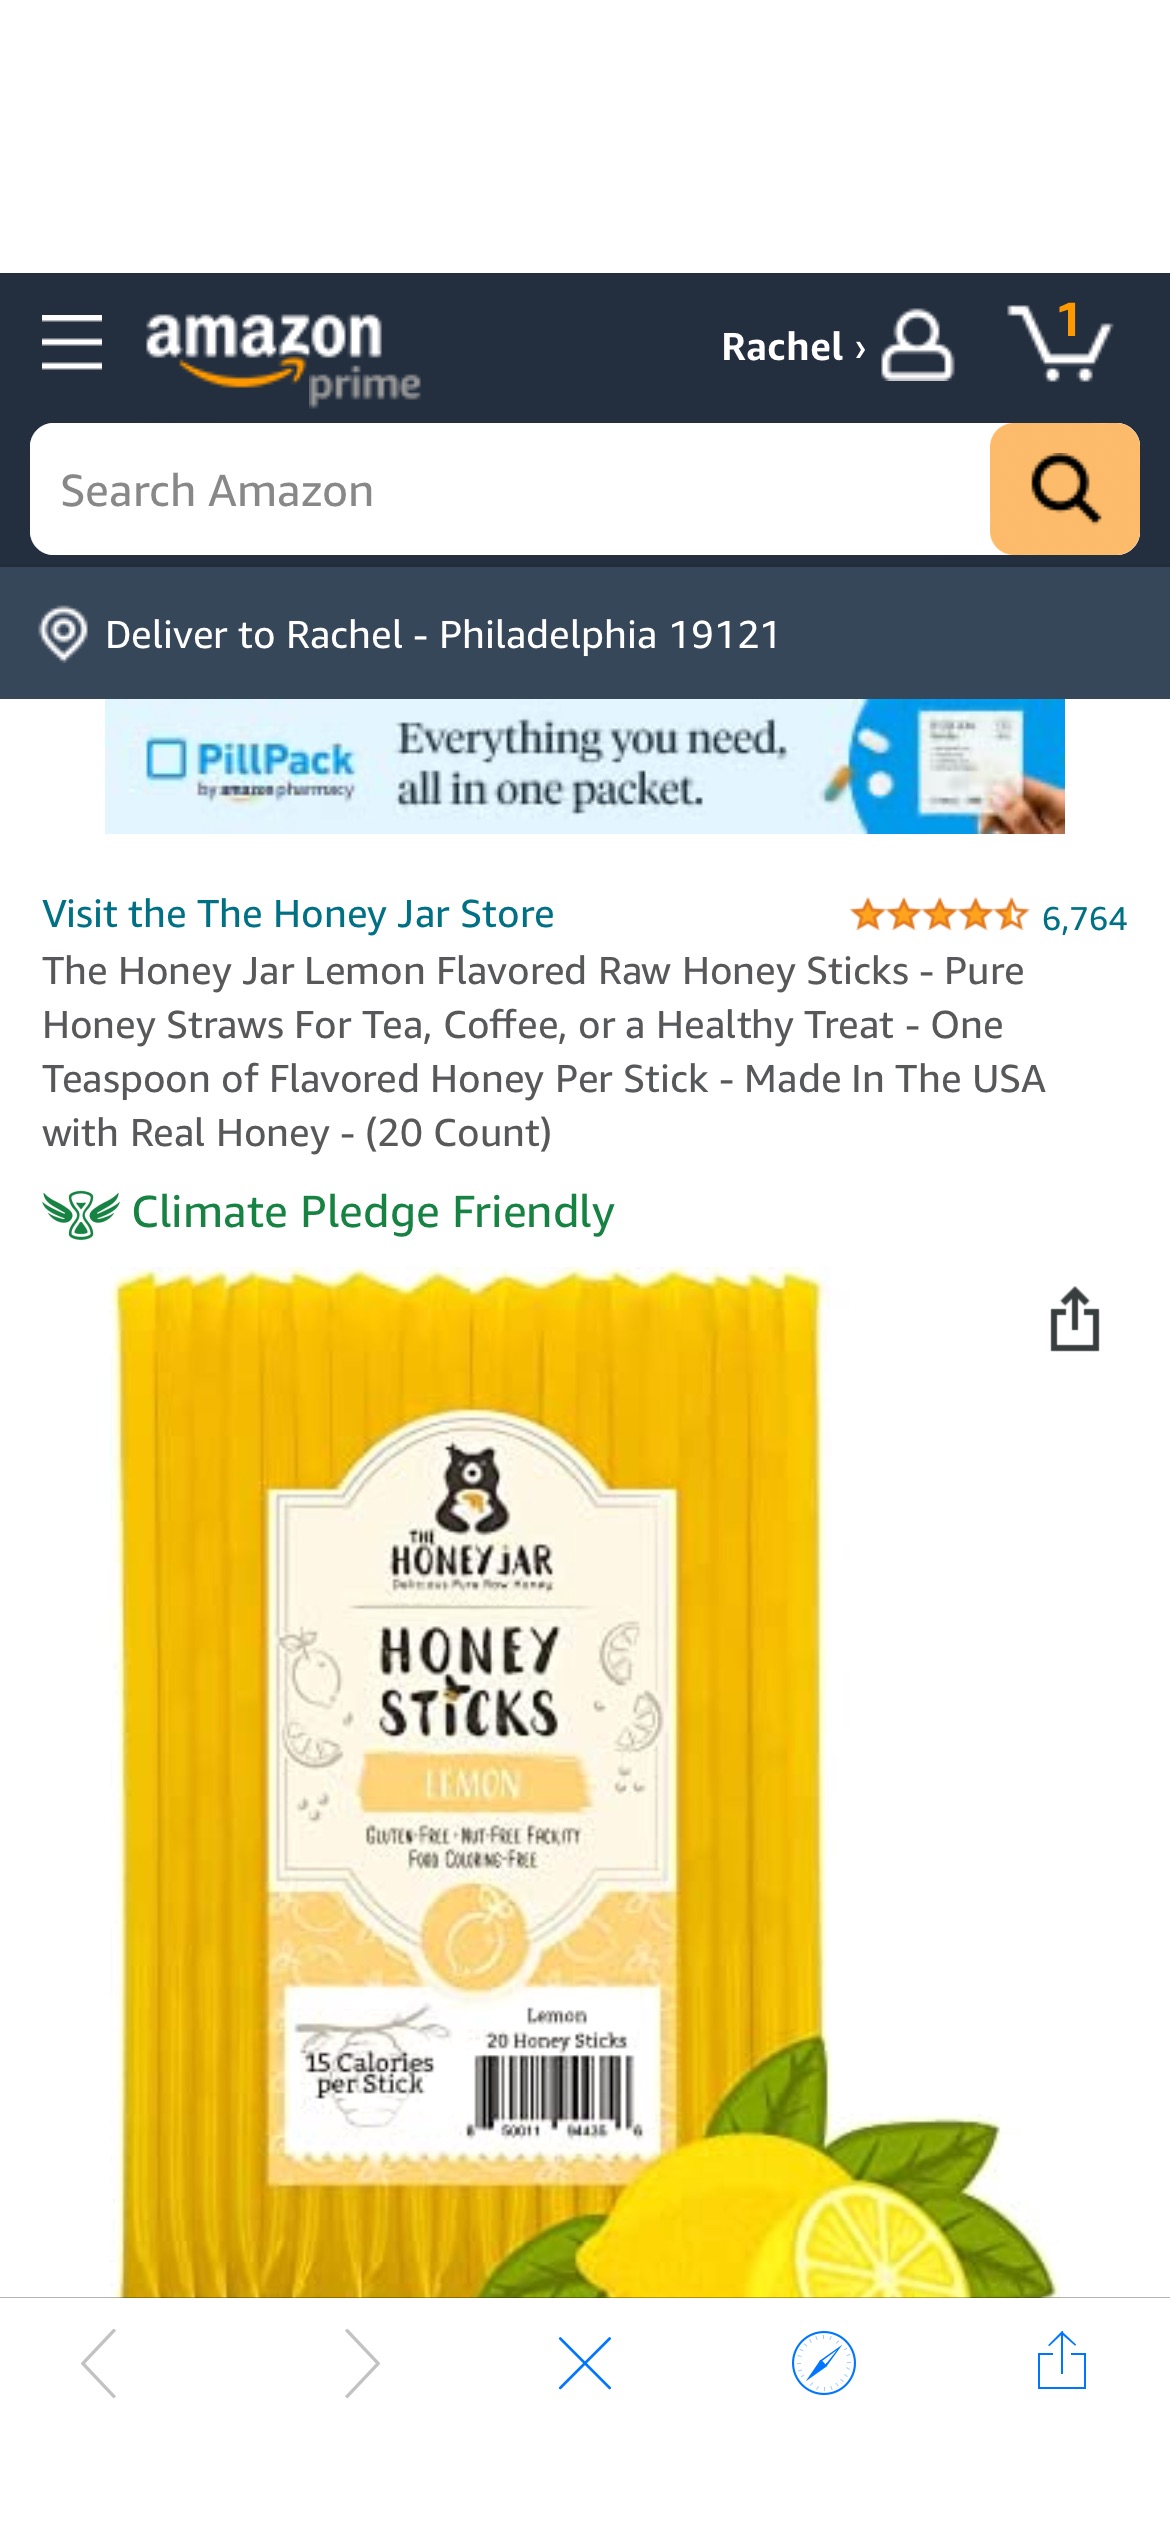 Amazon.com : The Honey Jar Lemon Flavored Raw Honey Sticks - Pure Honey Straws For Tea, Coffee, or a Healthy Treat - One Teaspoon